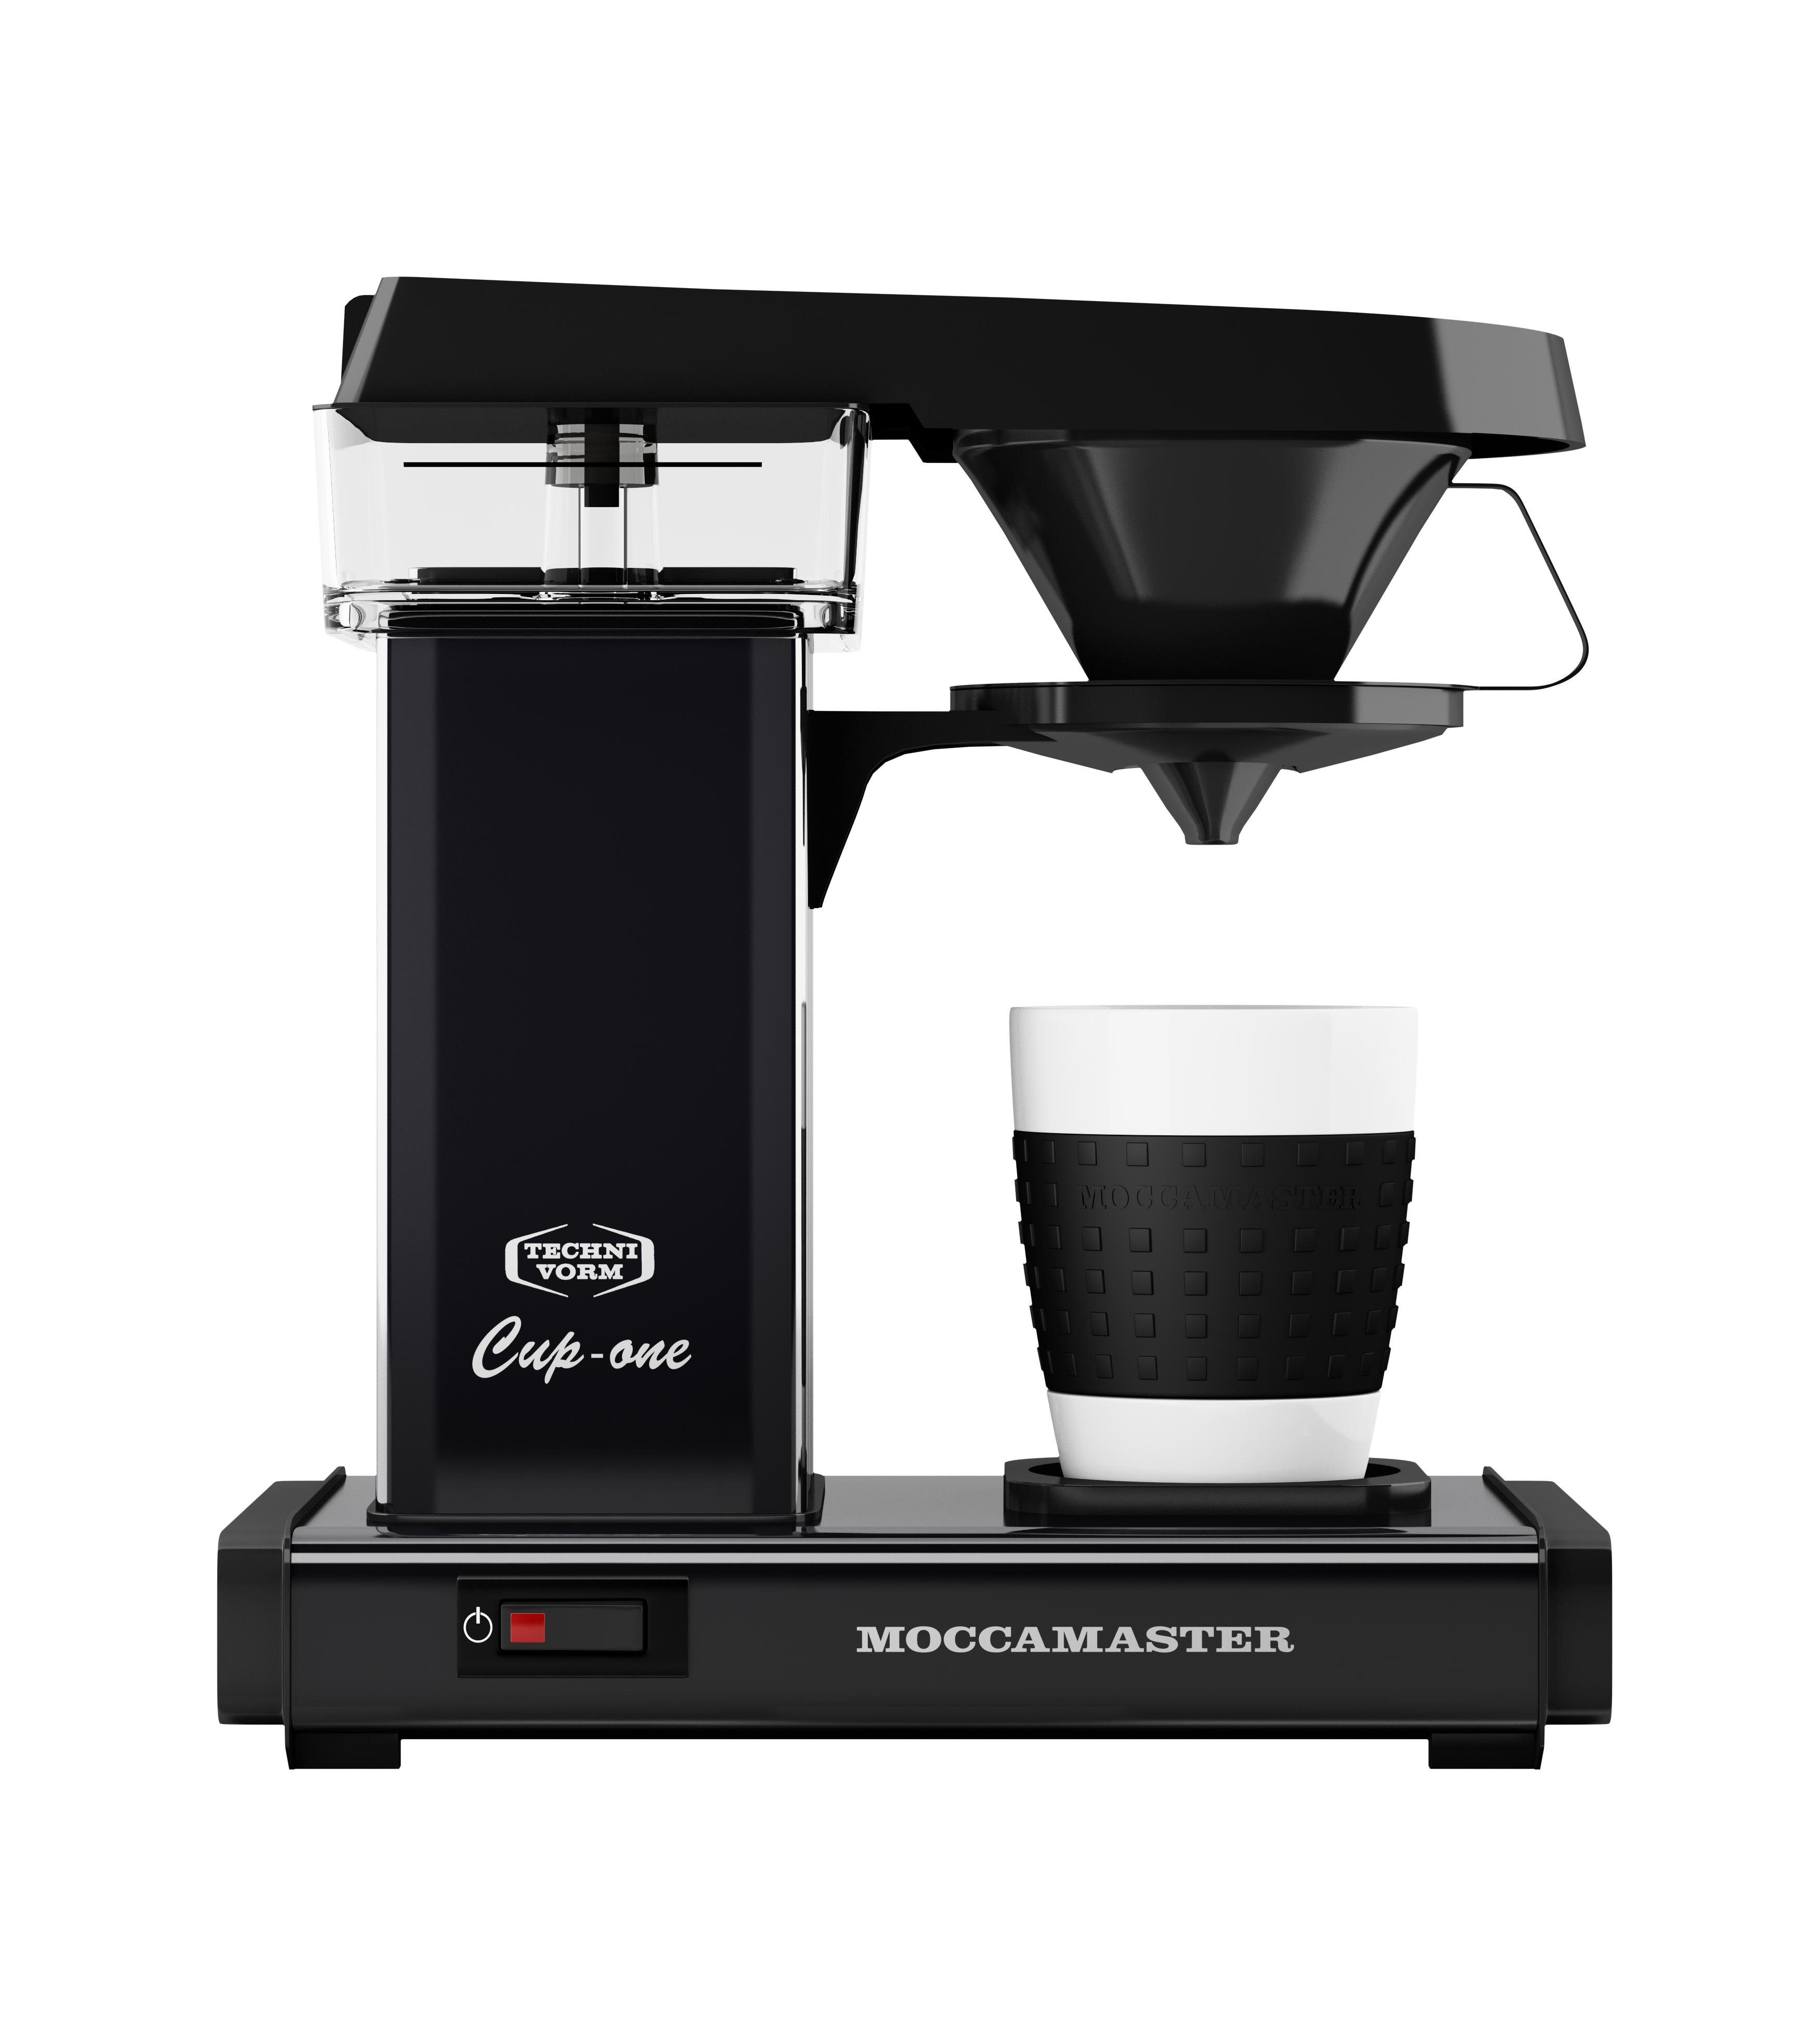 C Matt Moccamaster ° 80-85 Cup-one, Kaffeetemperatur C Black Brühtemperatur ° und Filterkaffeemaschine 92-96 1,